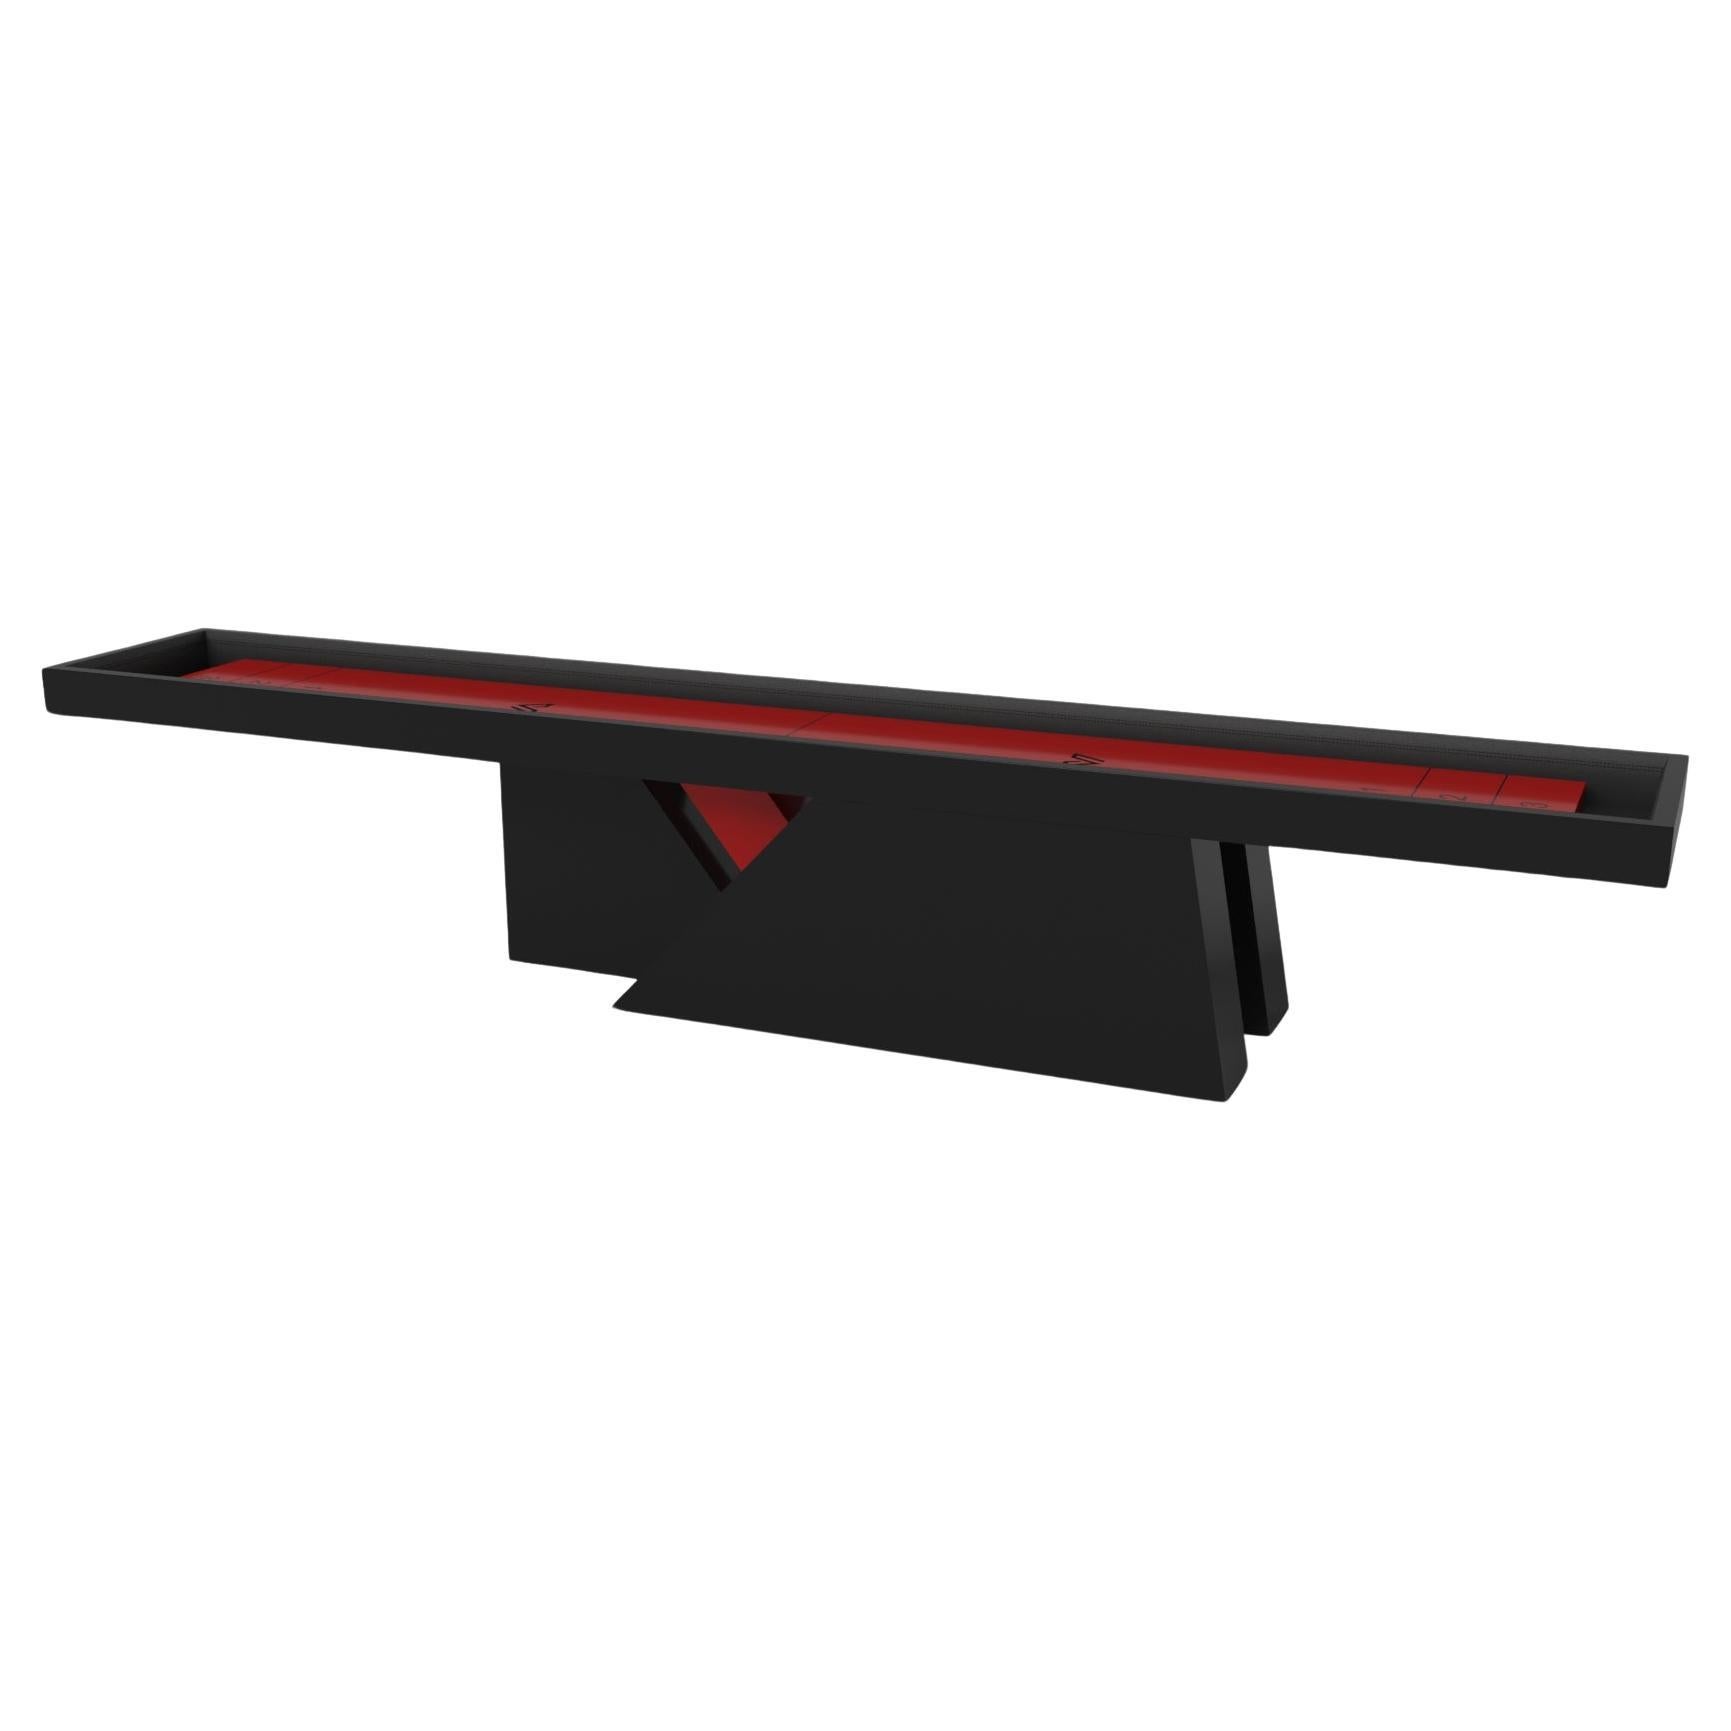 Elevate Customs Stilt Shuffleboard Tables /Solid Pantone Black Color in 16' -USA For Sale